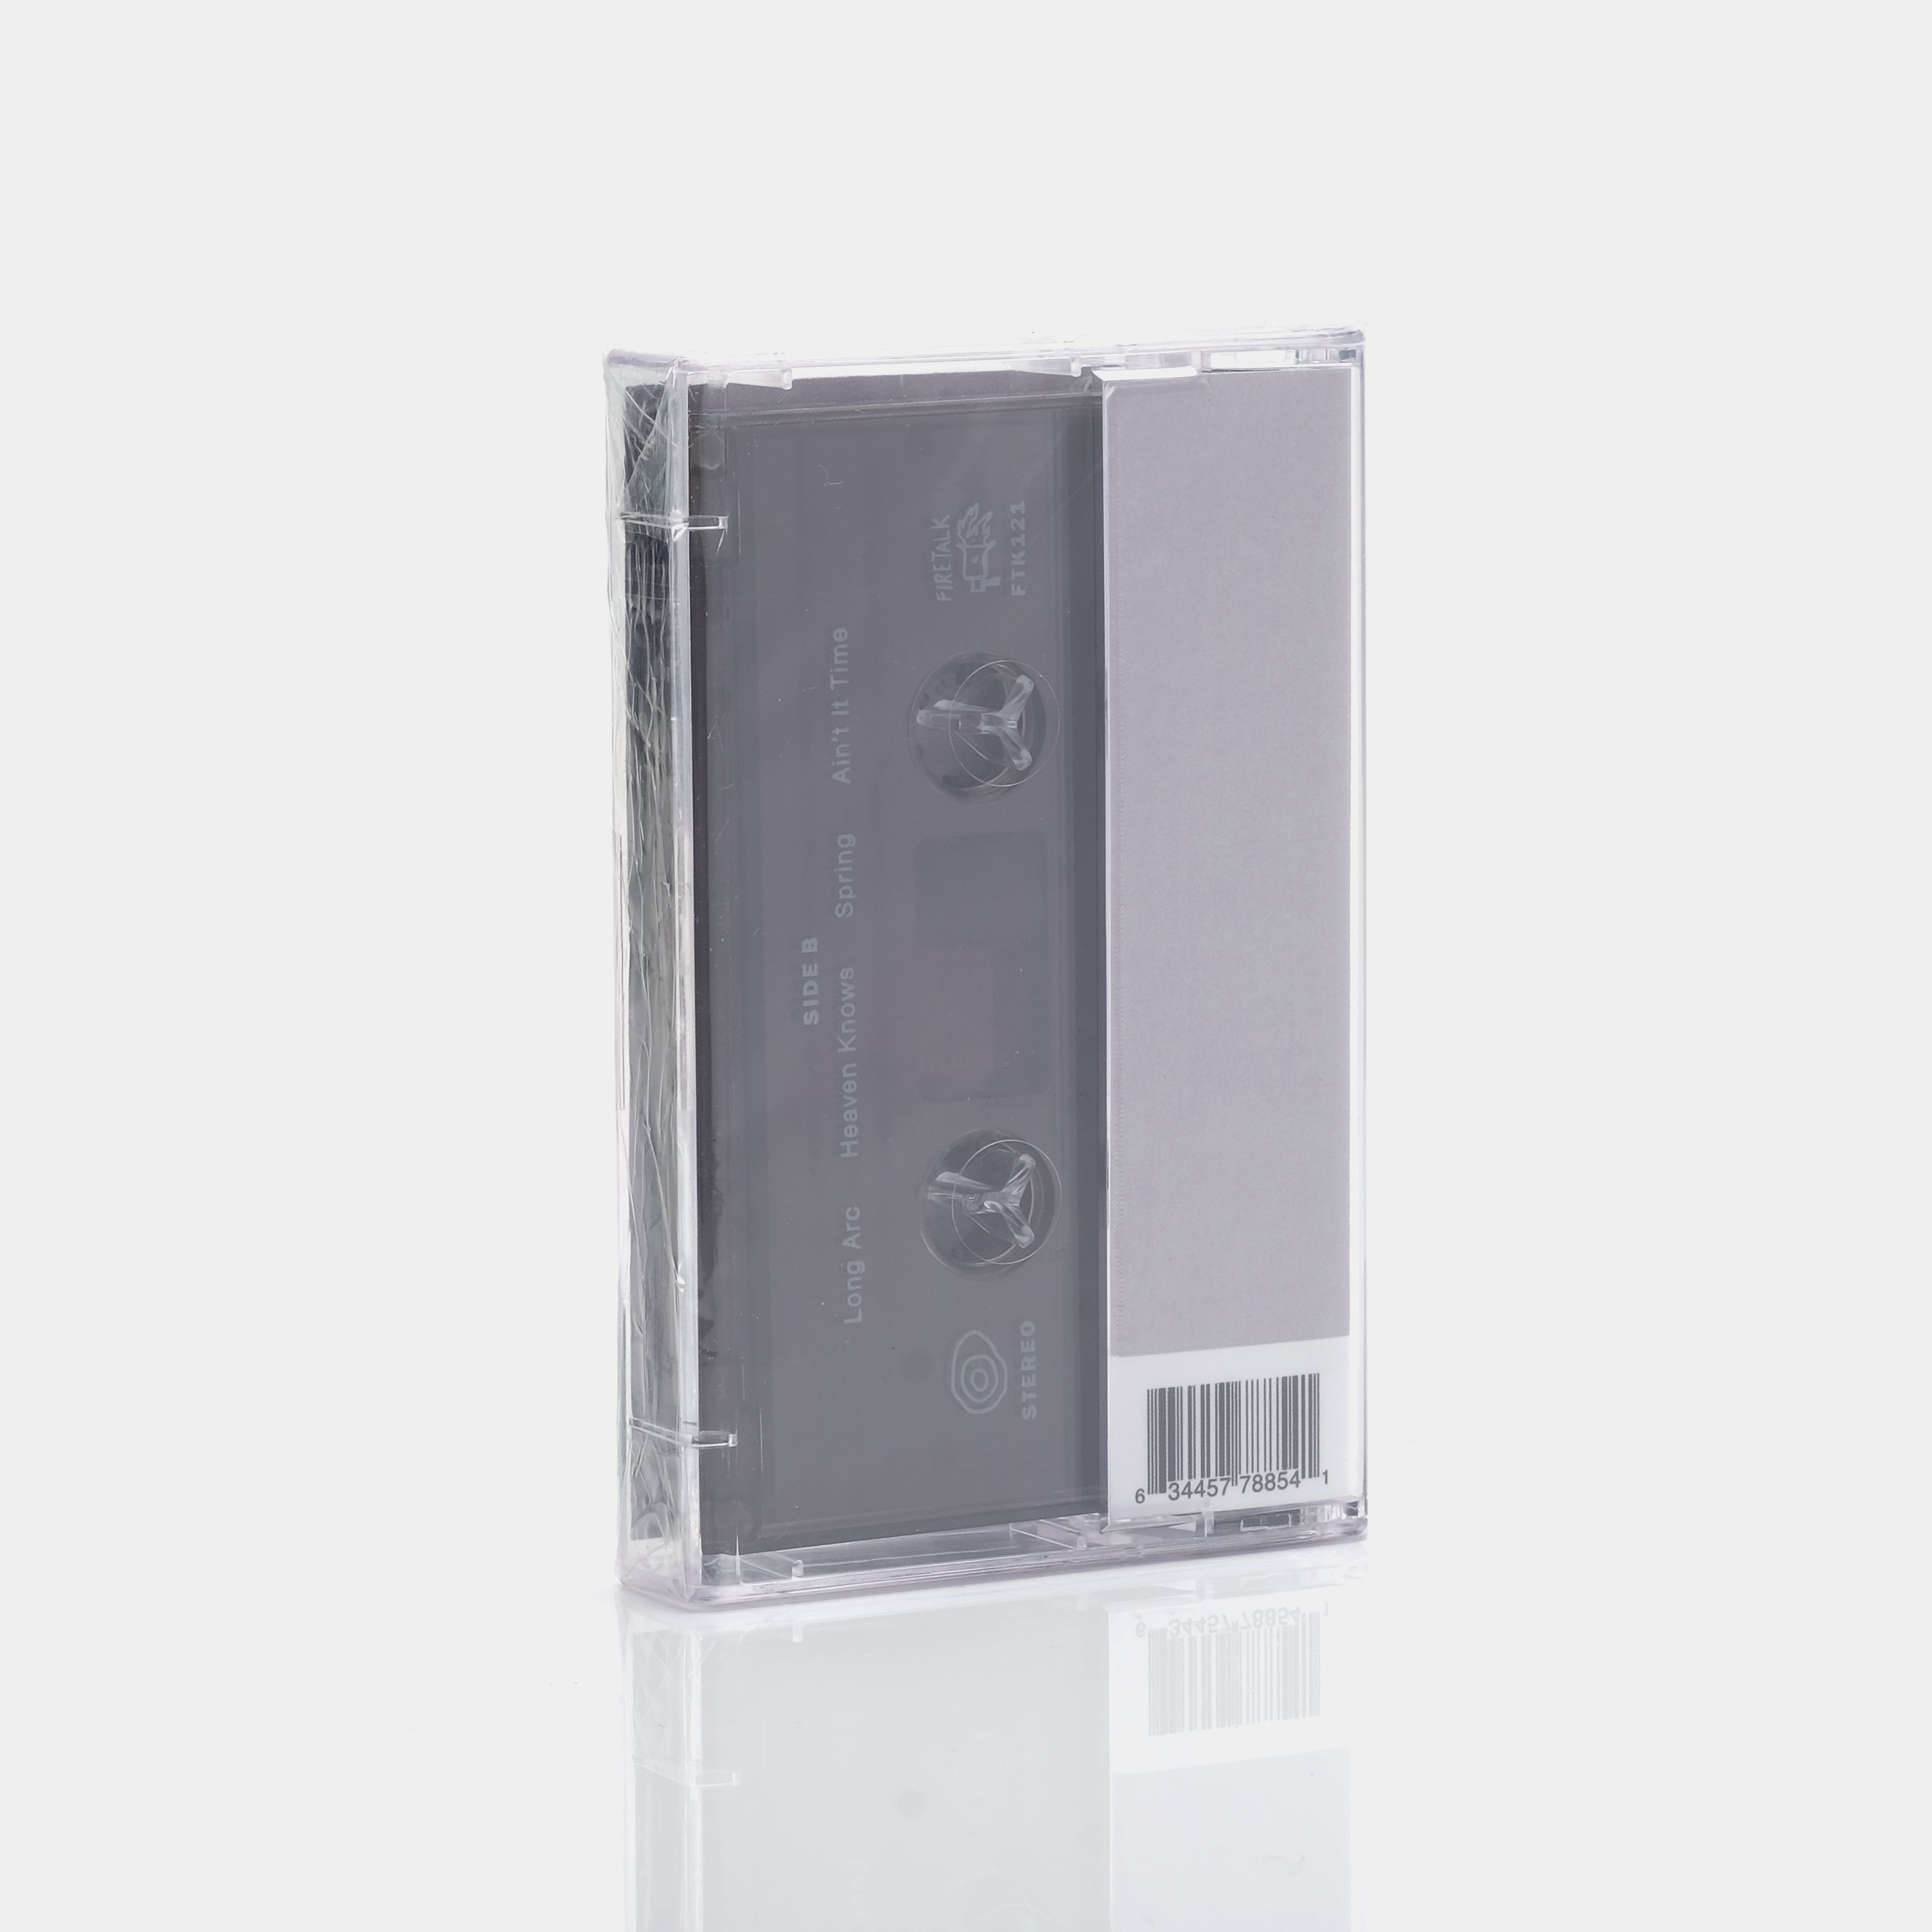 Nassau - Heron Cassette Tape